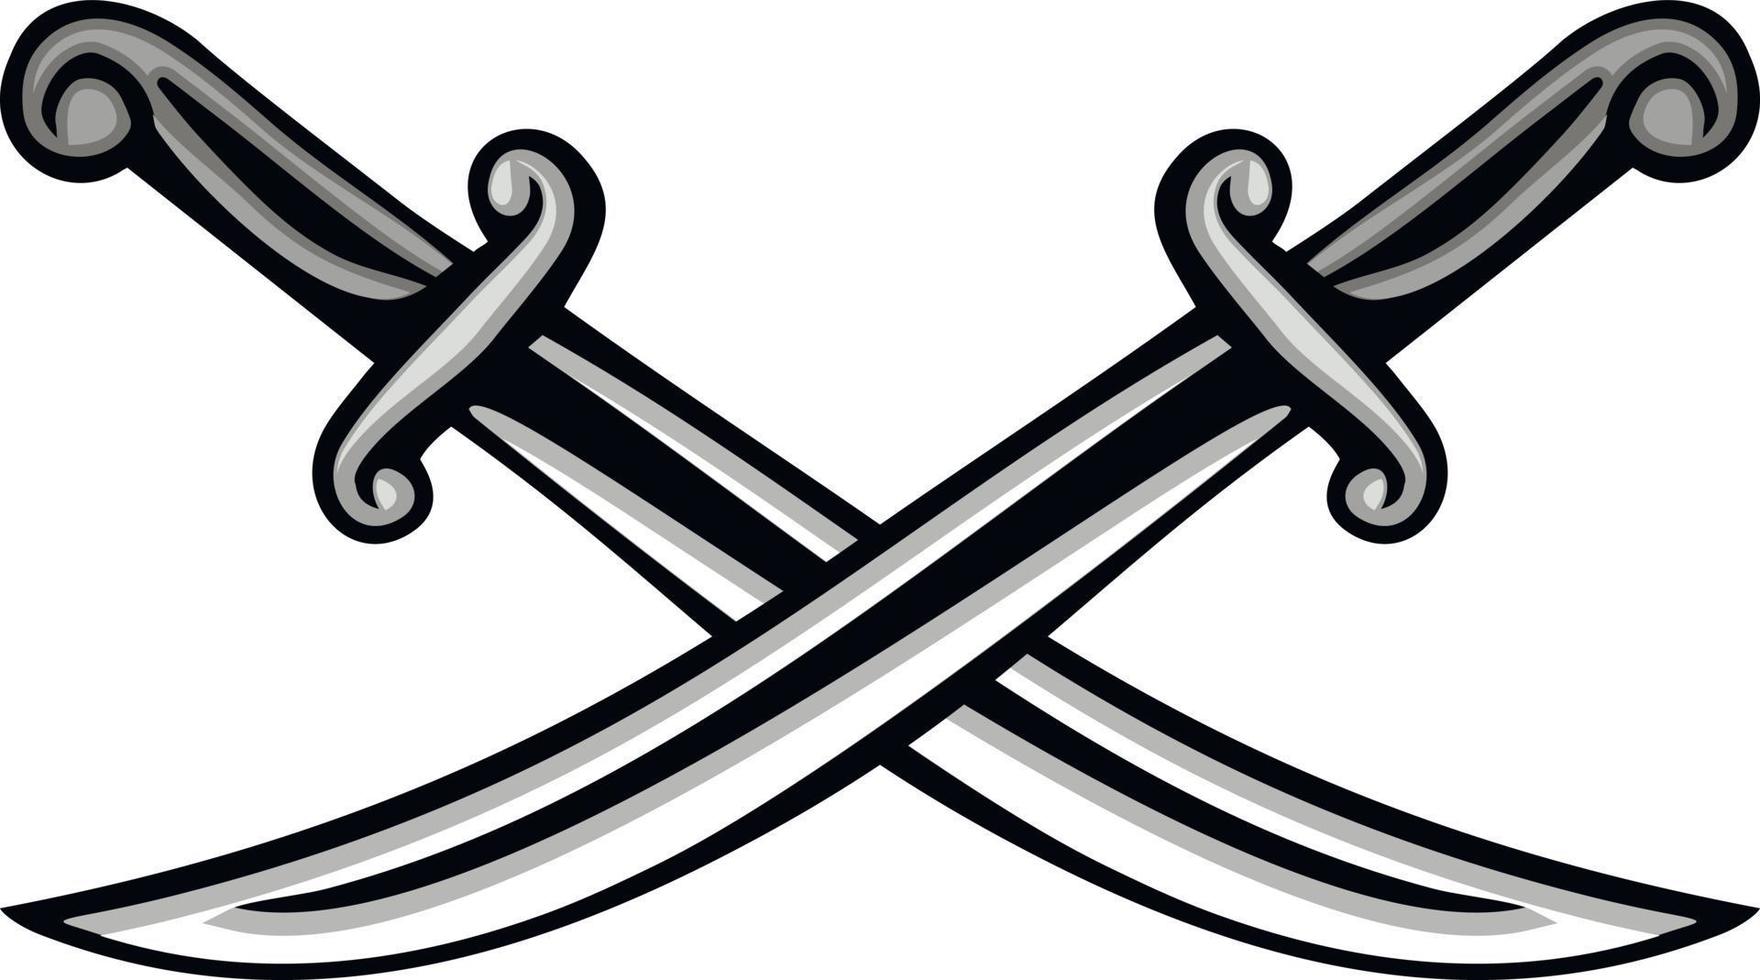 Crossed Swords and Sabers, Vectors